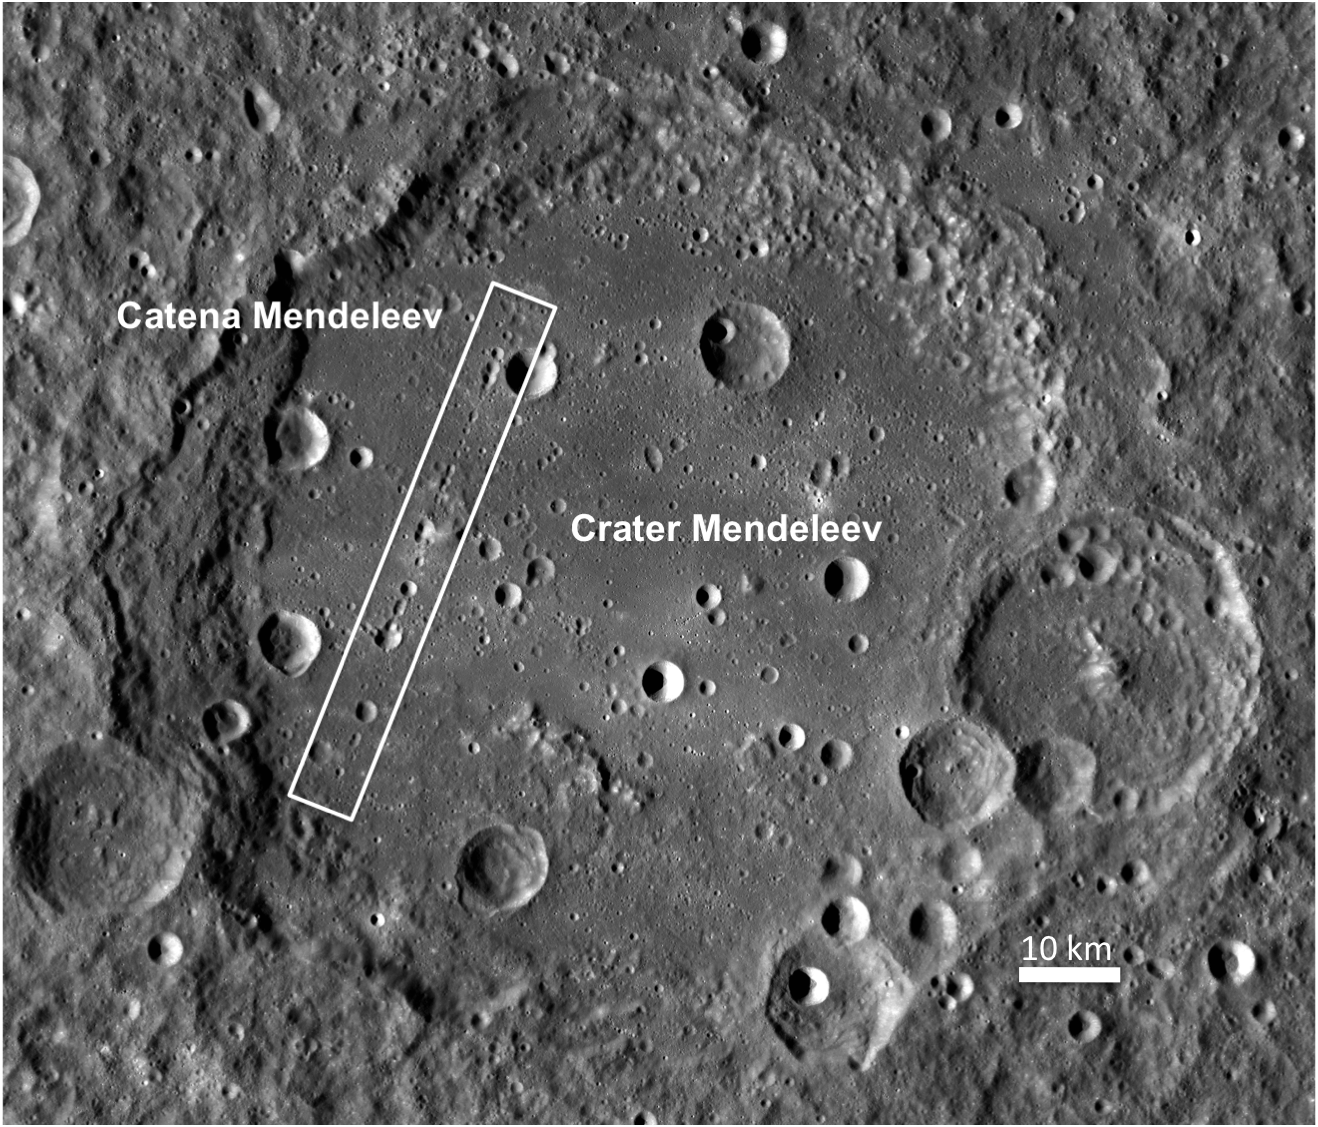 Crater Mendeleev